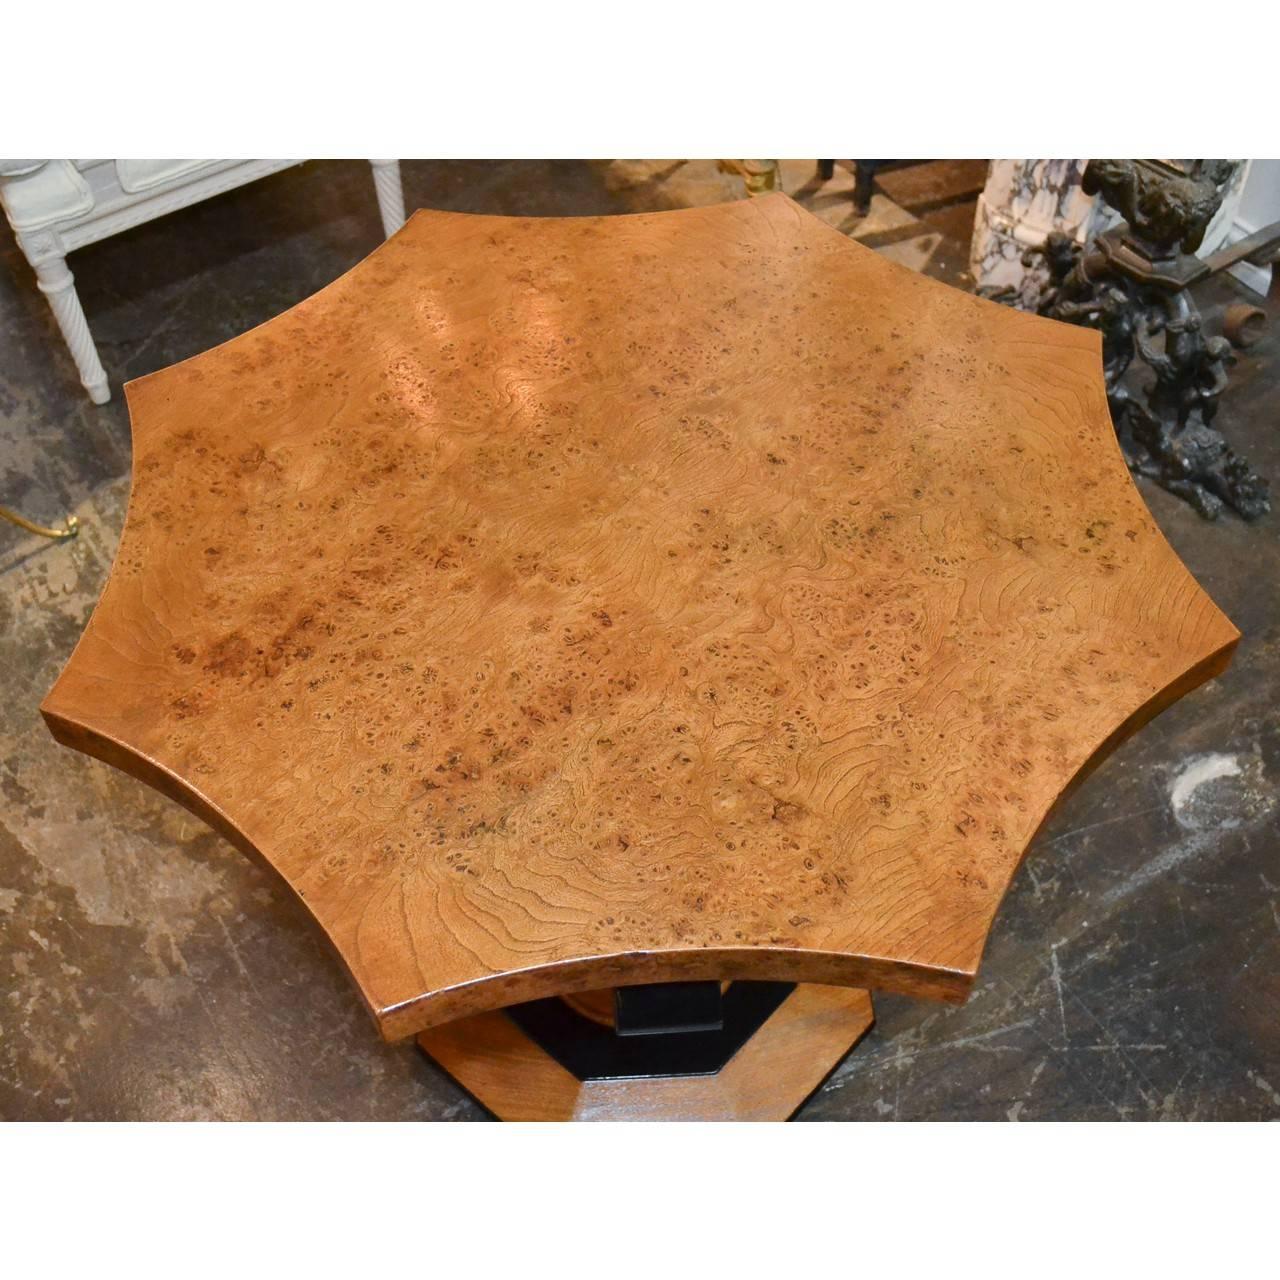 Midcentury continental burl wood table with ebonized trim.